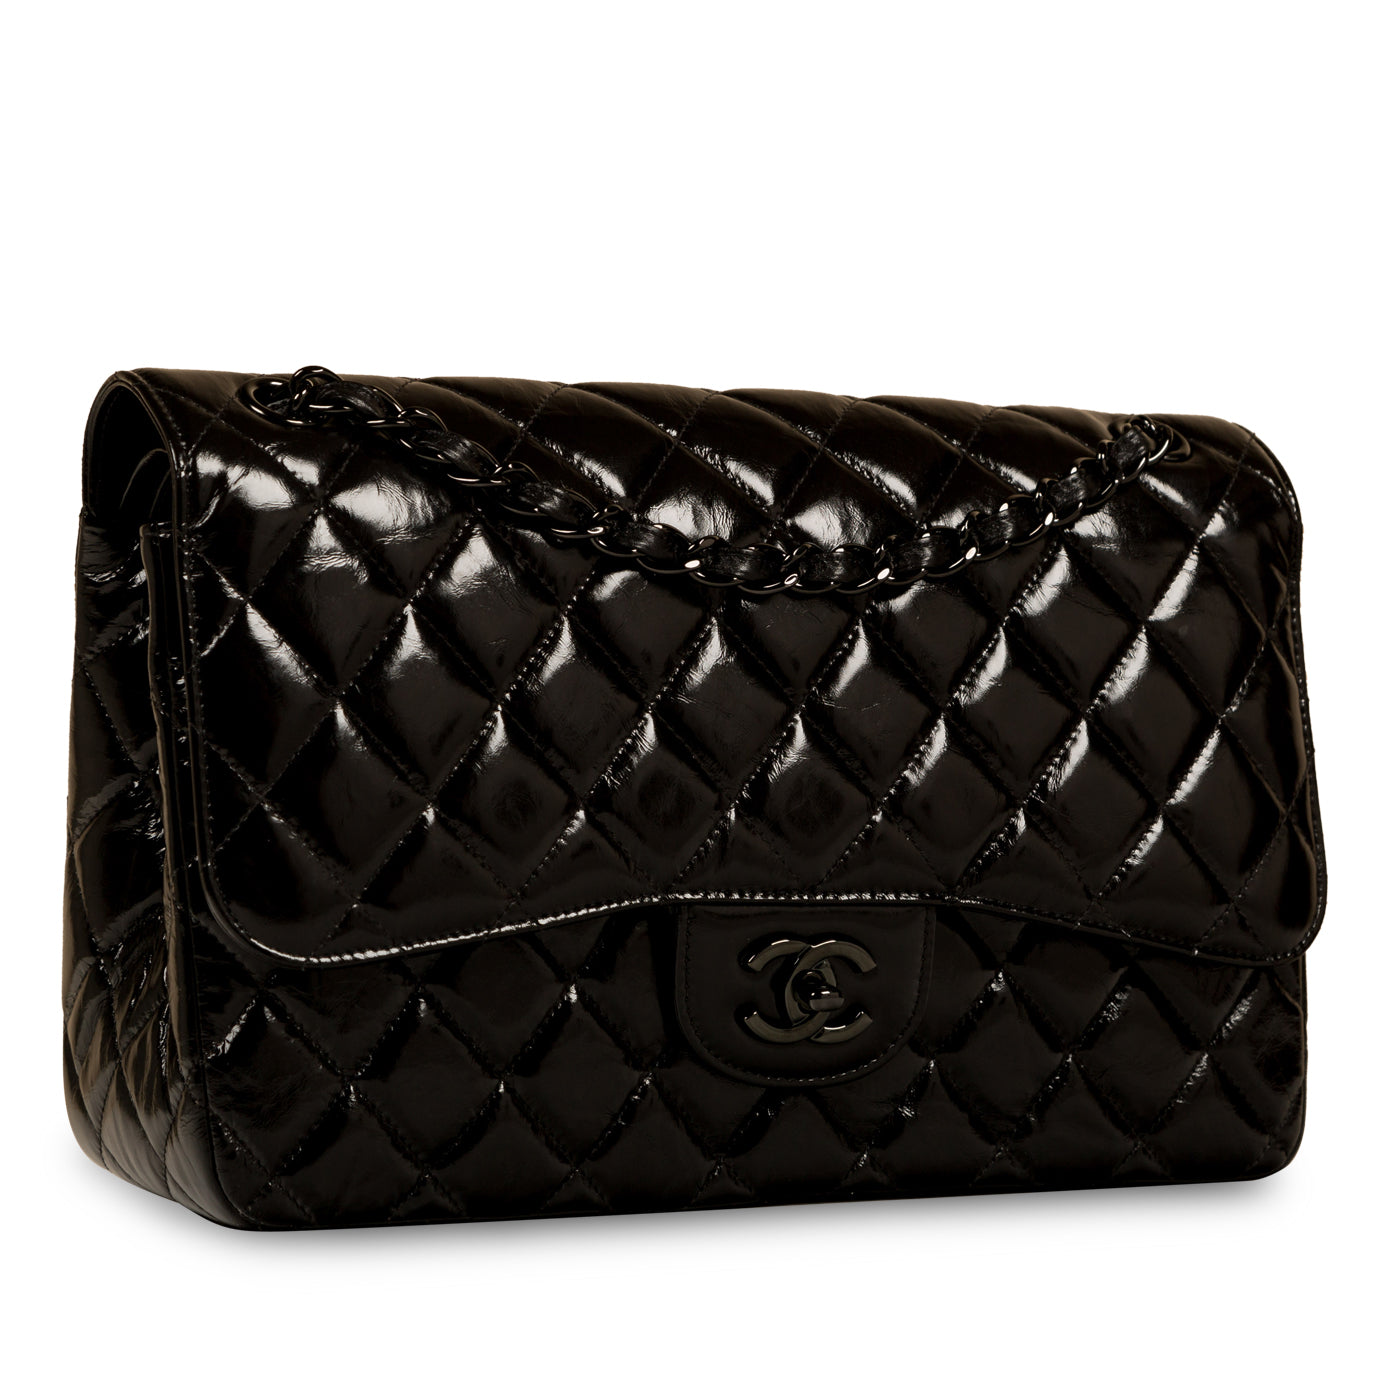 Fashion « Chanel-Vuitton », Sale n°2045, Lot n°202